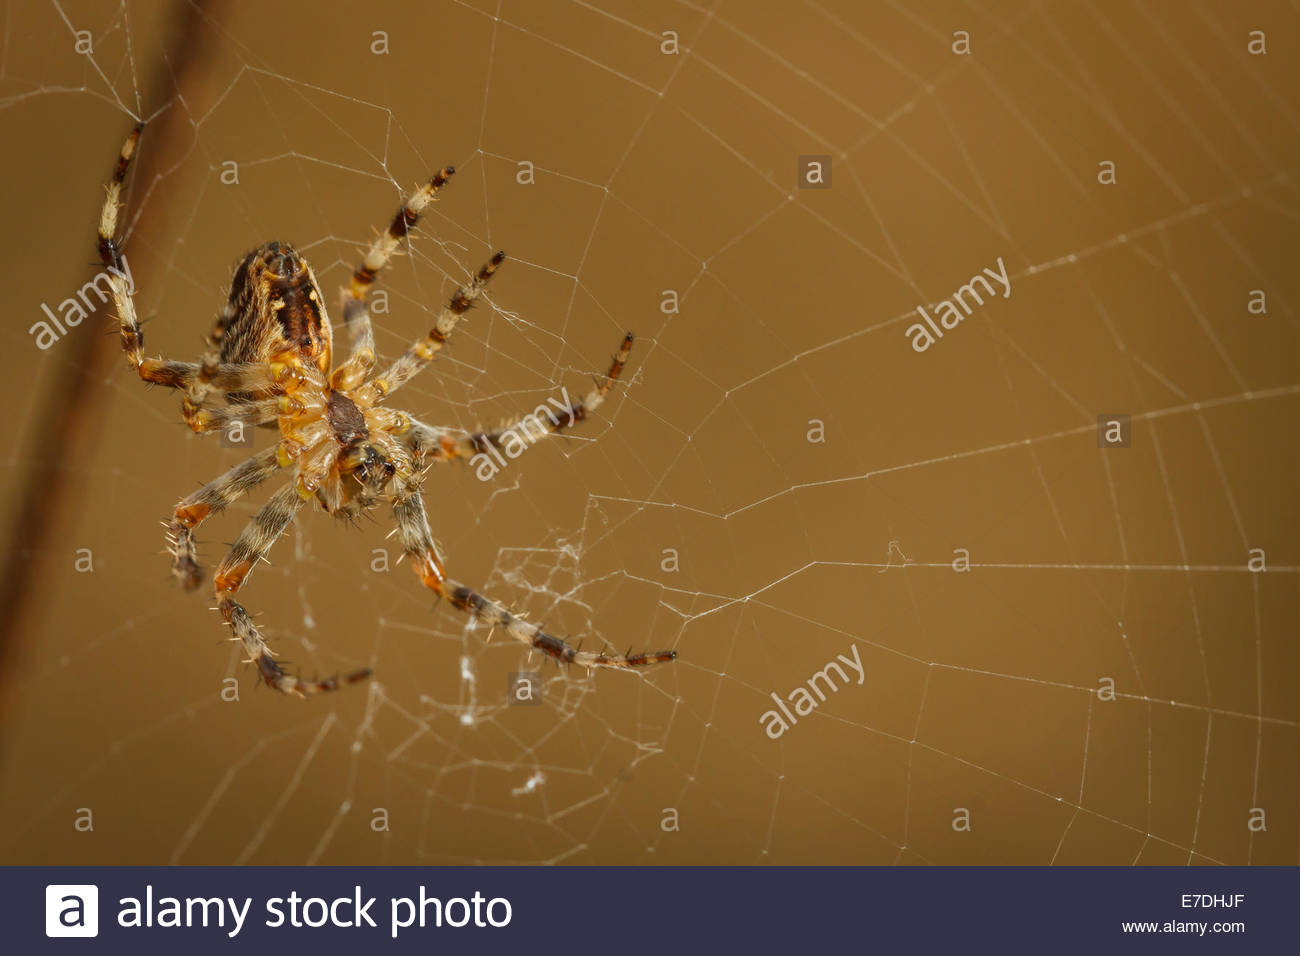 Underside Of A Common Garden Spider Araneus Diadematus On Its